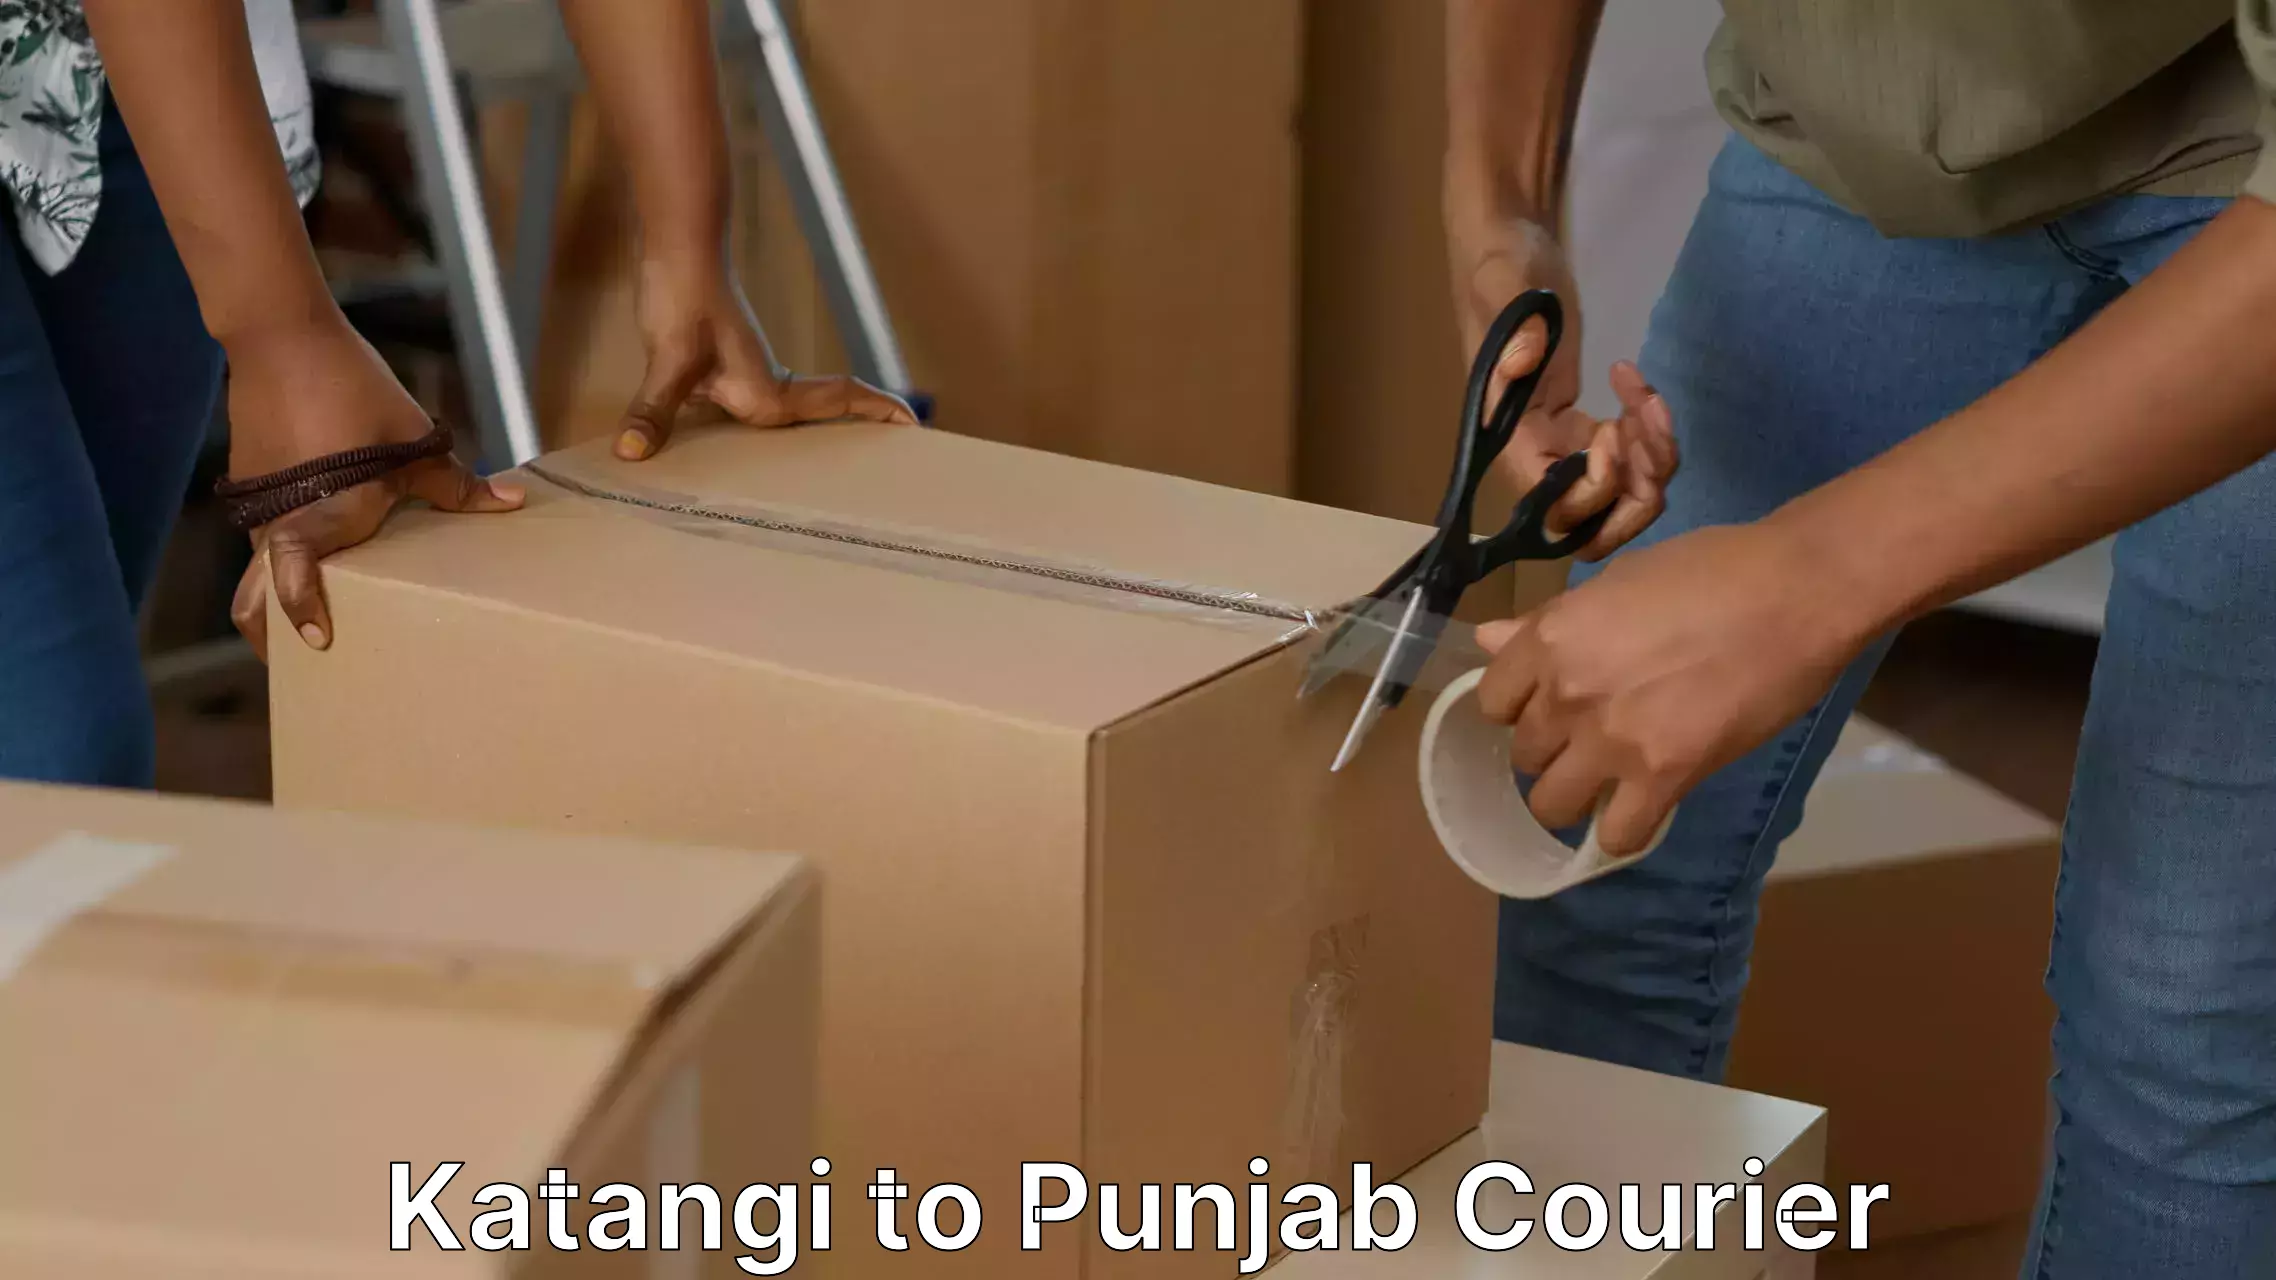 Trusted moving company Katangi to Punjab